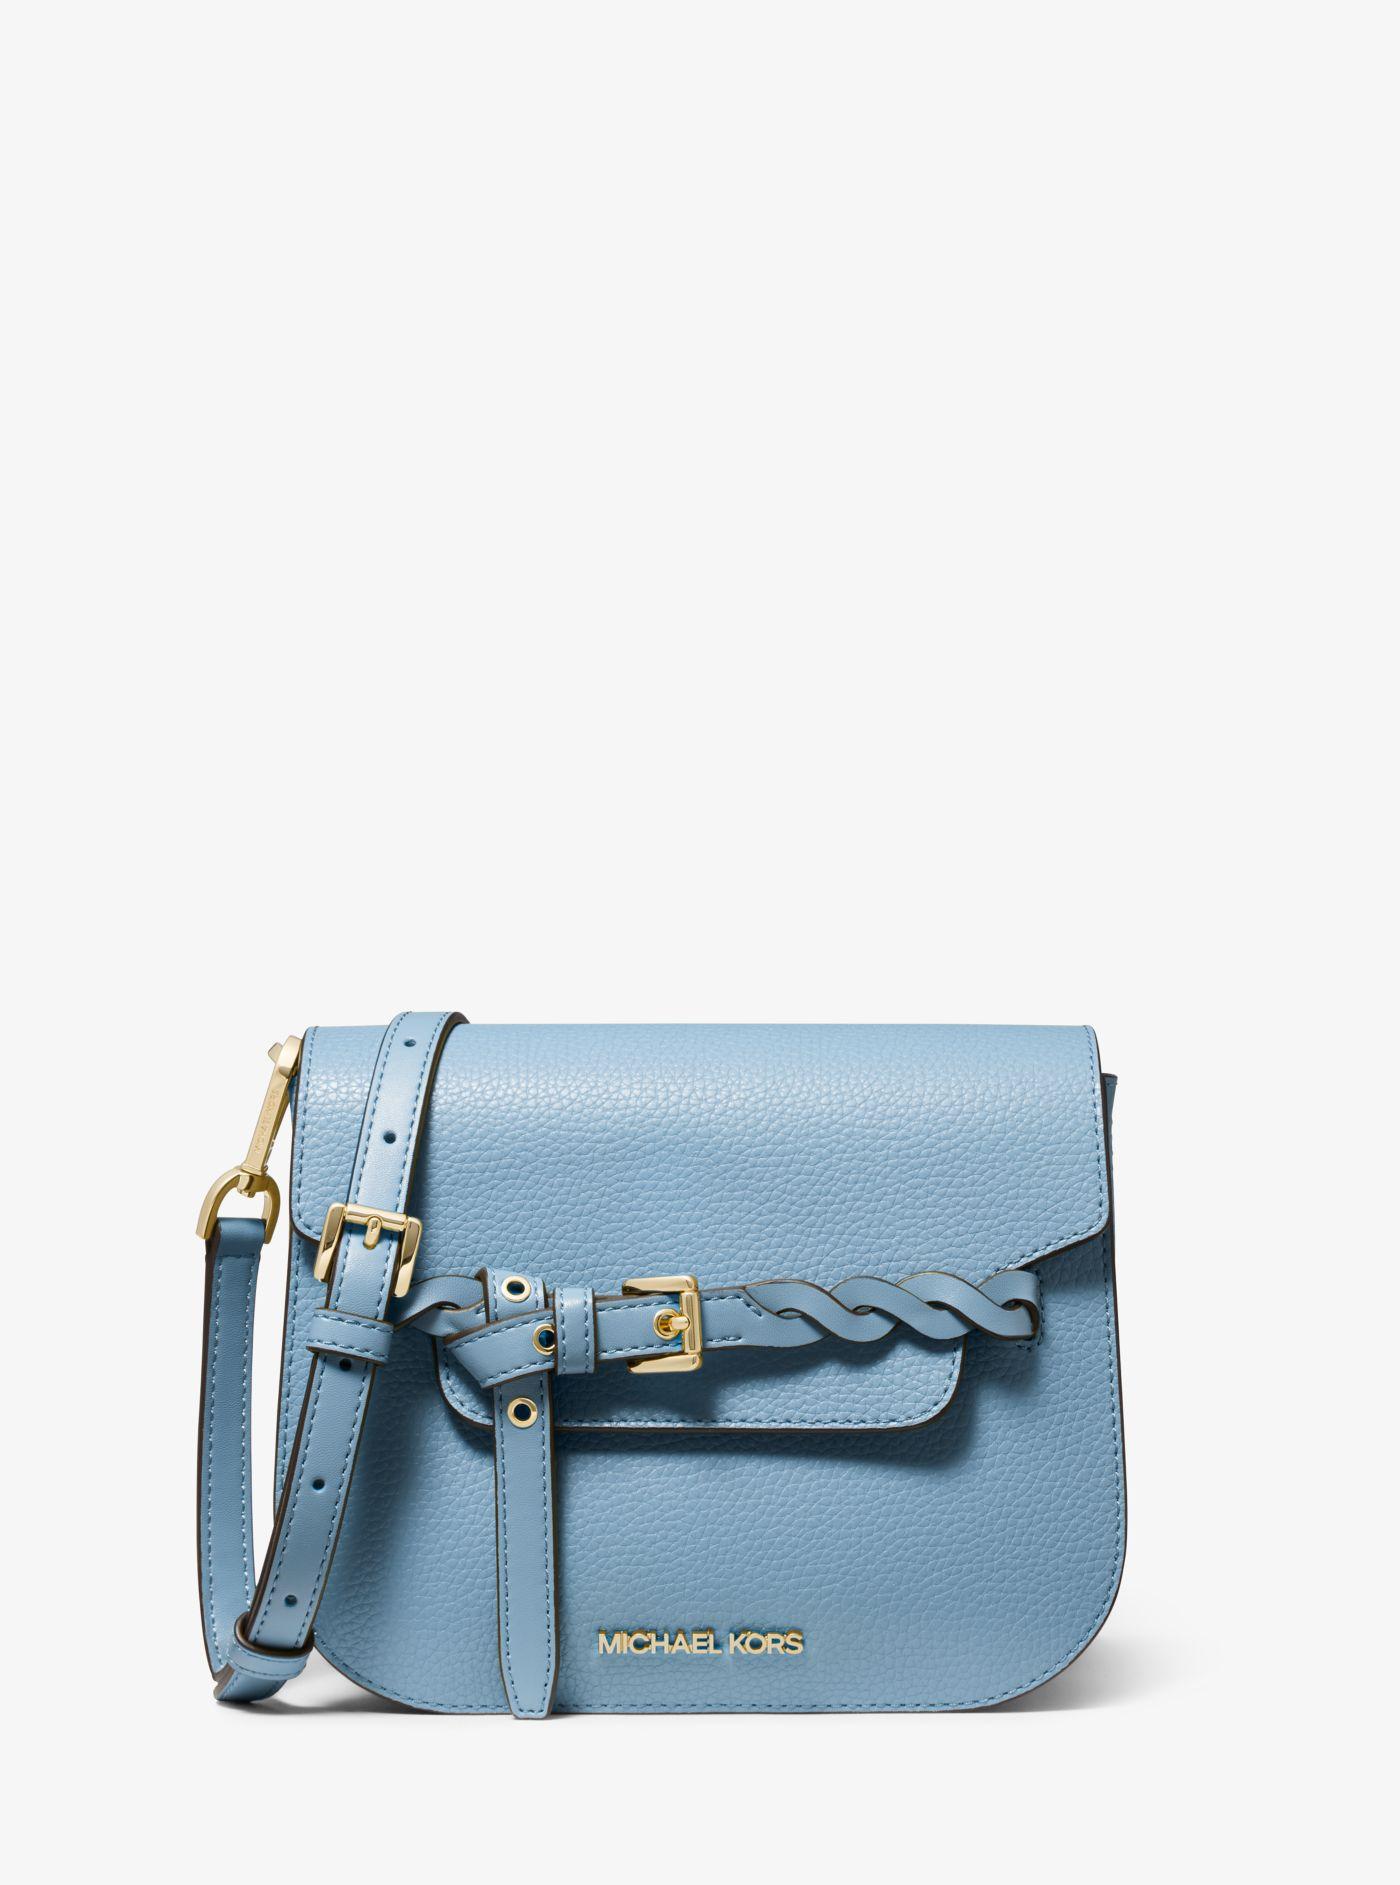 Michael Kors Emilia Small Pebbled Leather Crossbody Bag in Blue | Lyst